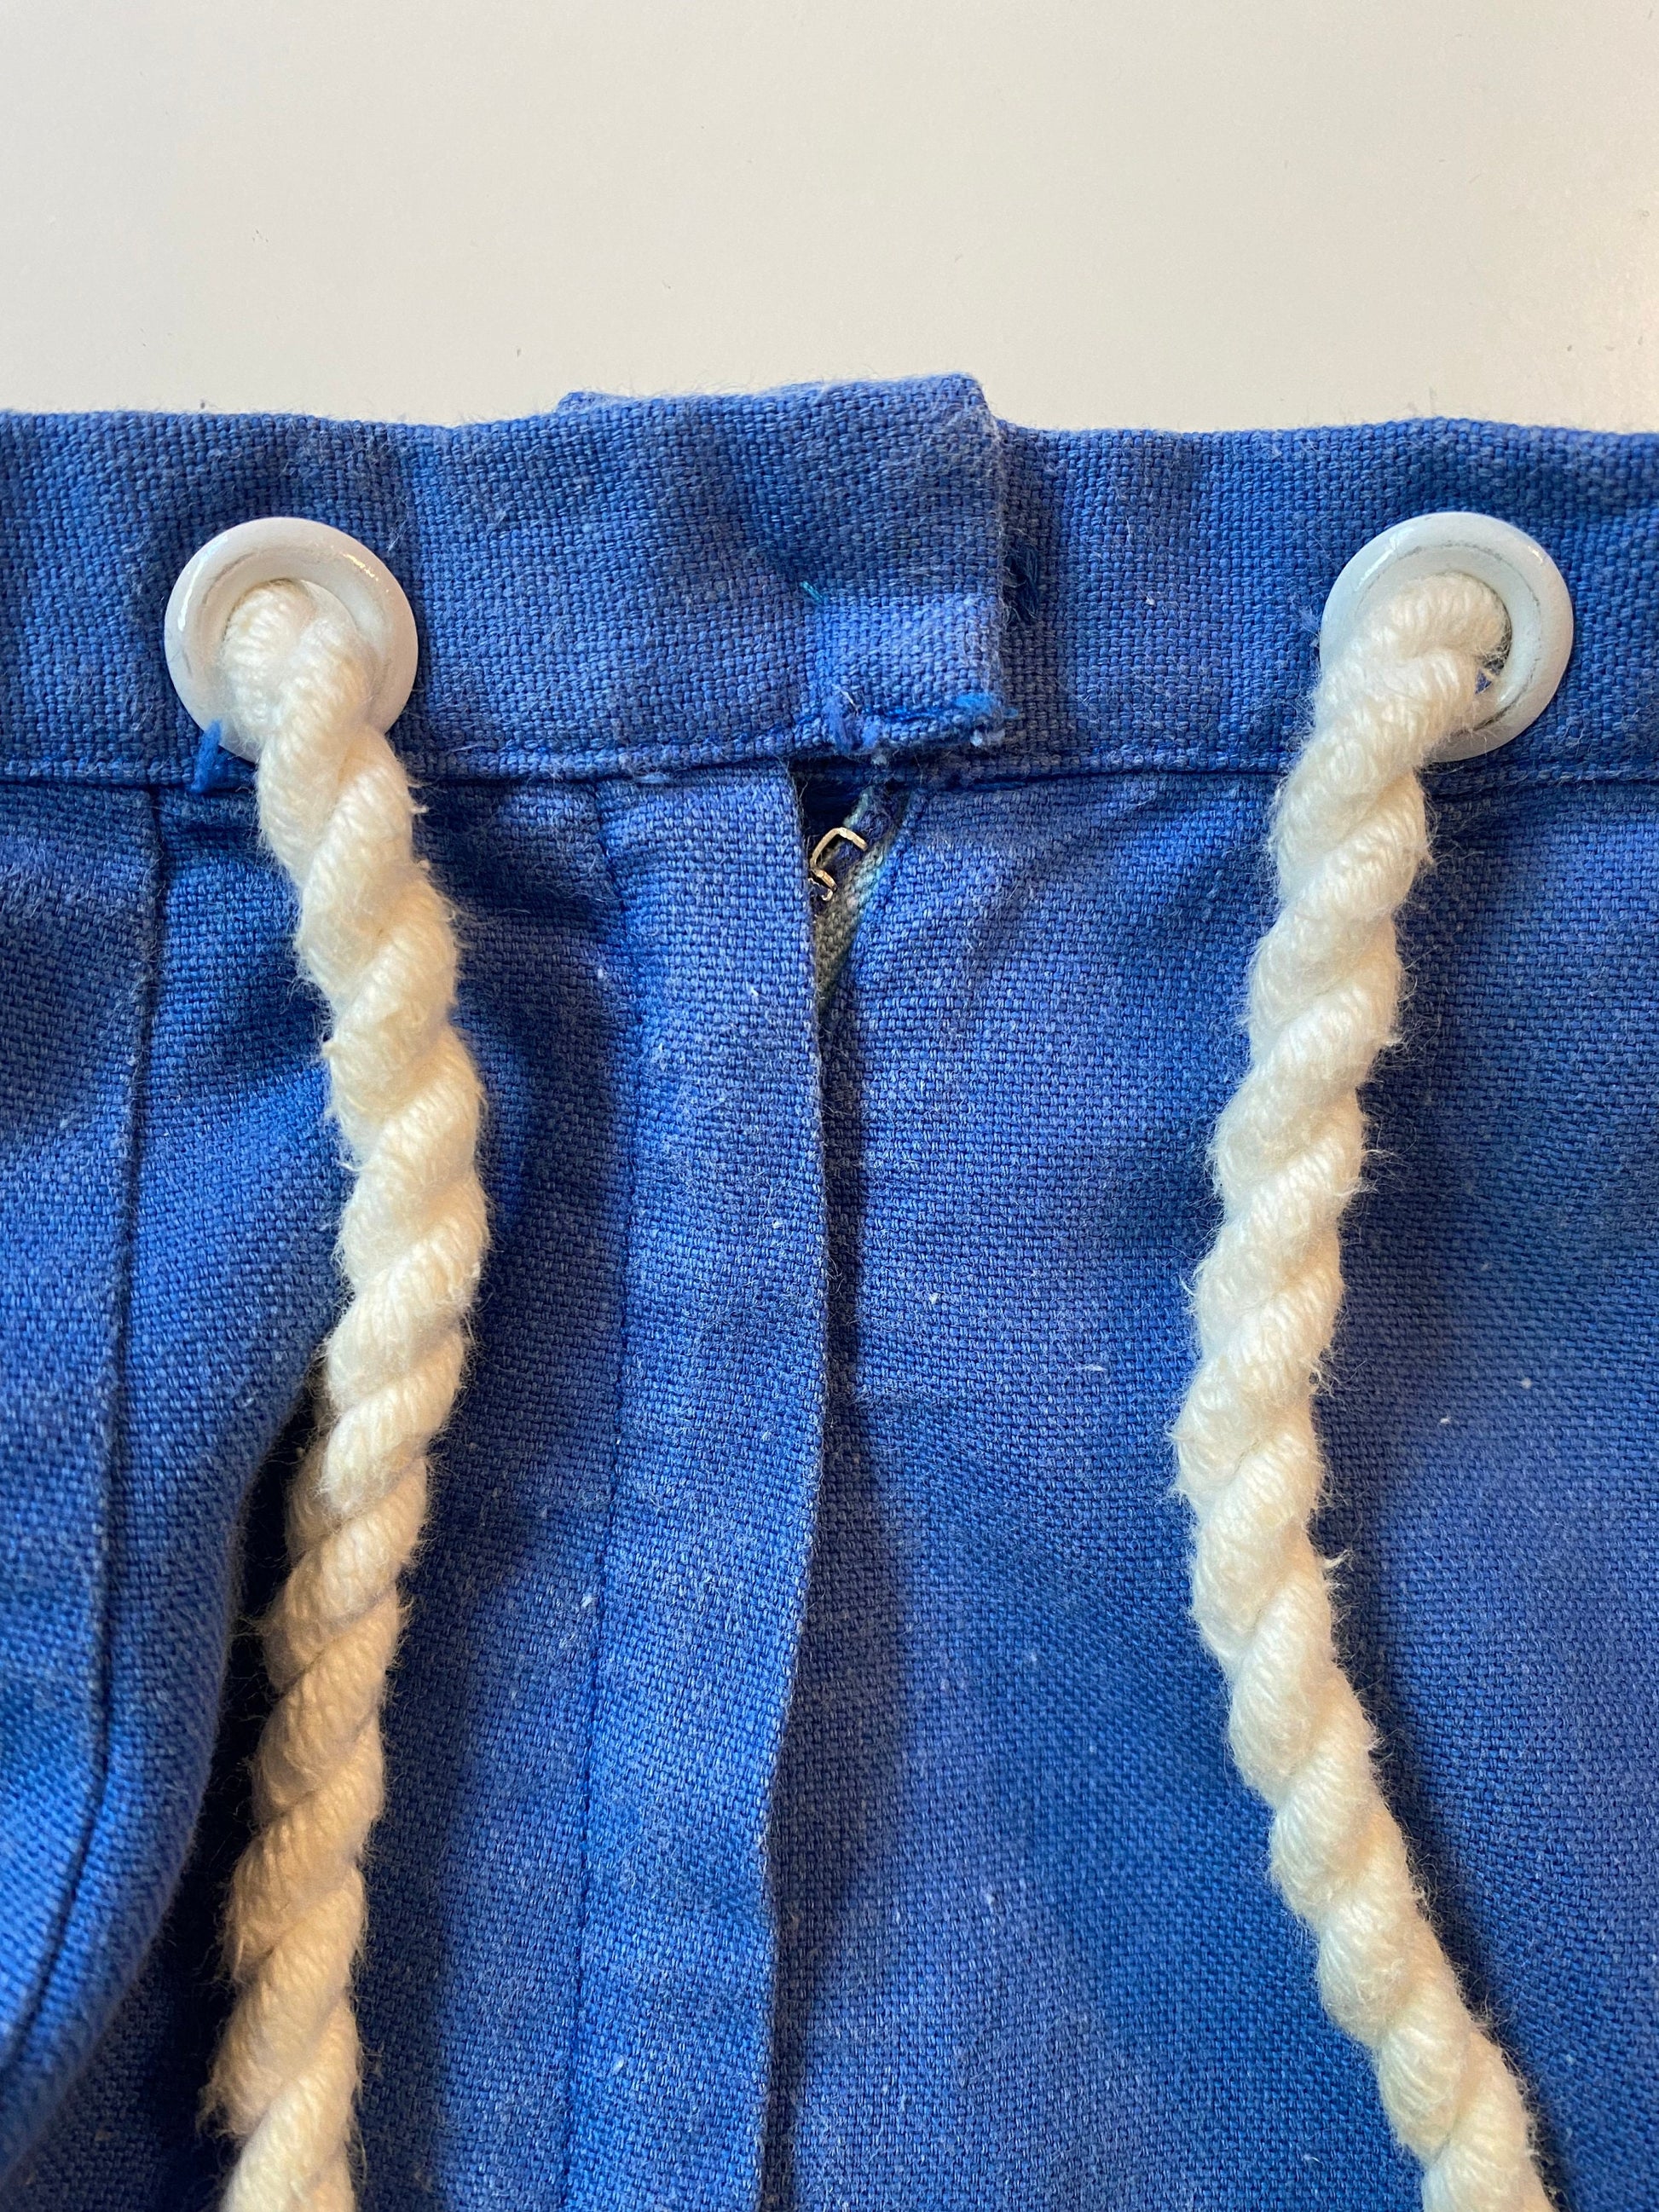 Sew Knit N Stretch 221 1960s Girls Underwear Pattern Panties